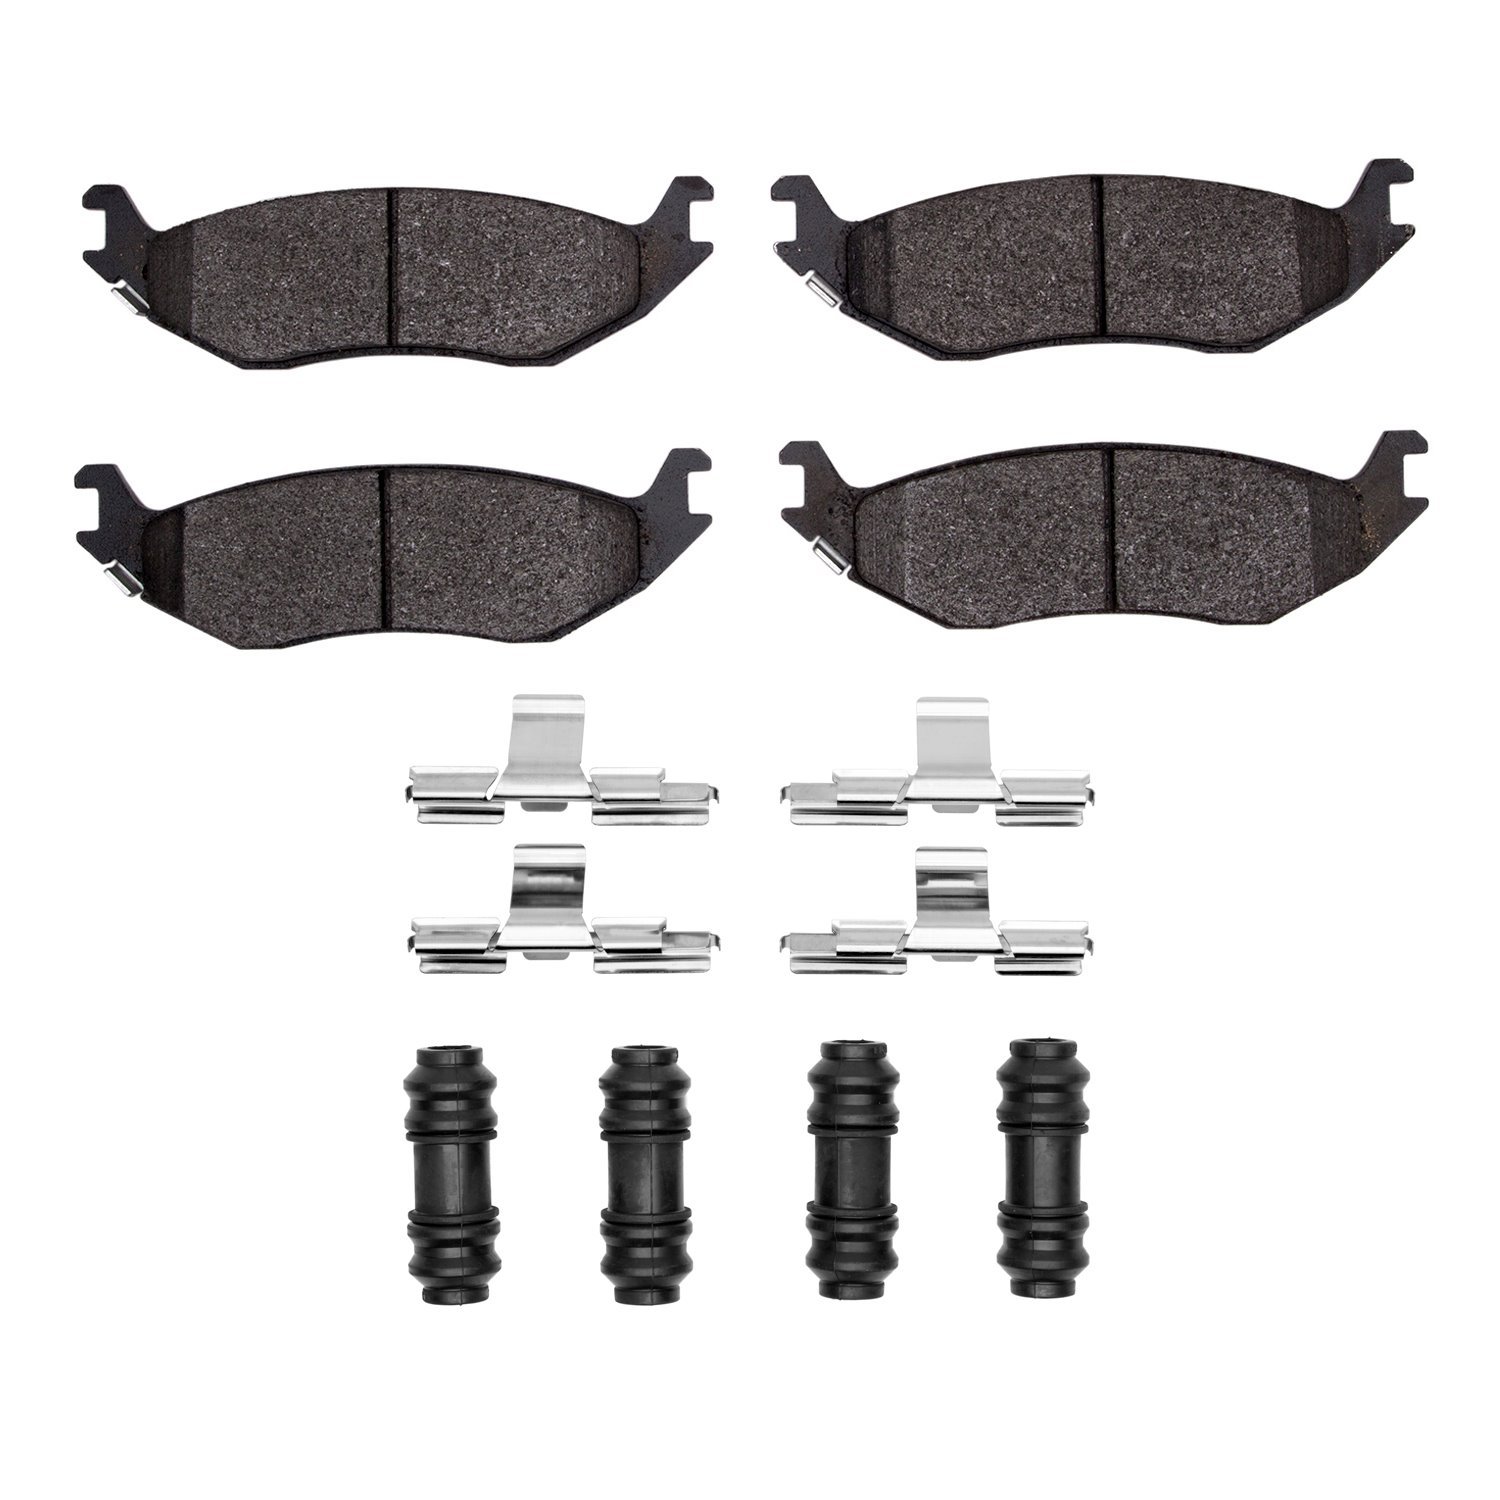 1400-0898-01 Ultimate-Duty Brake Pads & Hardware Kit, Fits Select Mopar, Position: Rear